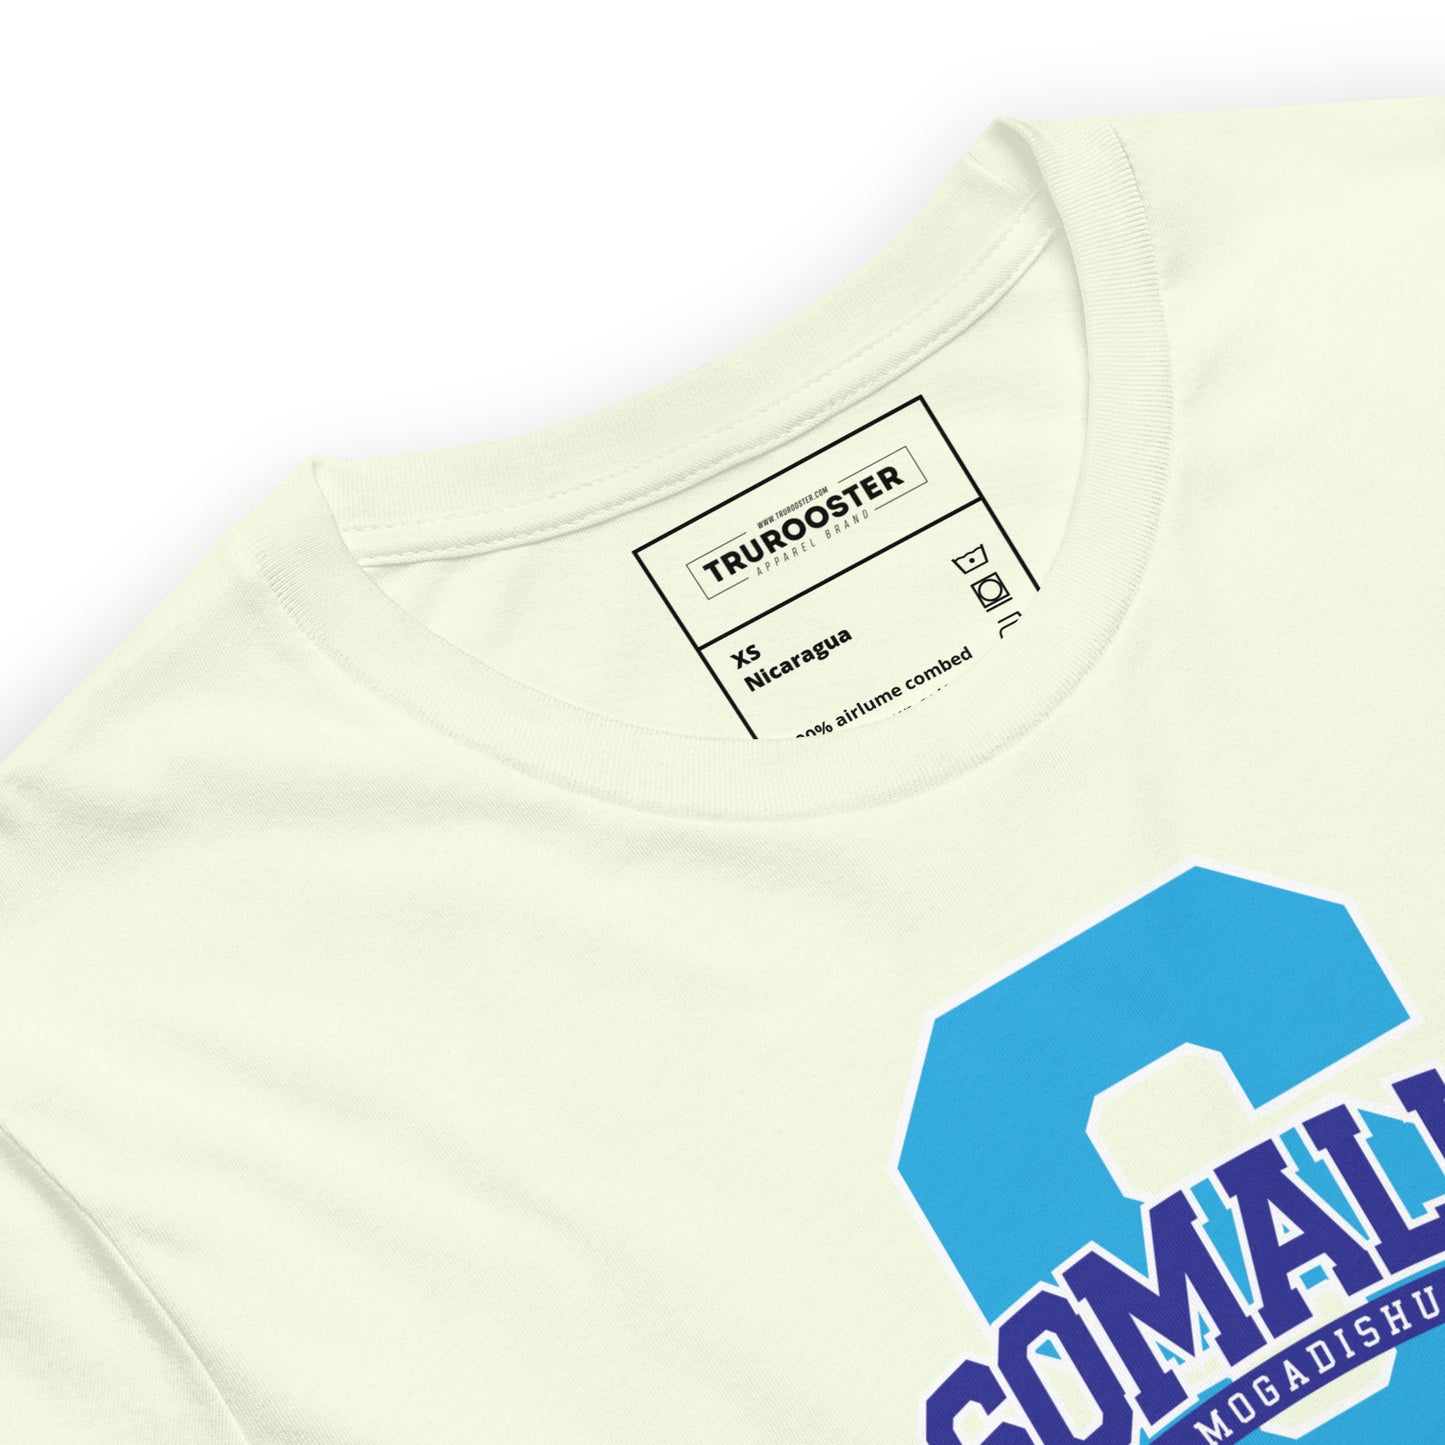 Somalia Mogadishu Unisex t-shirt